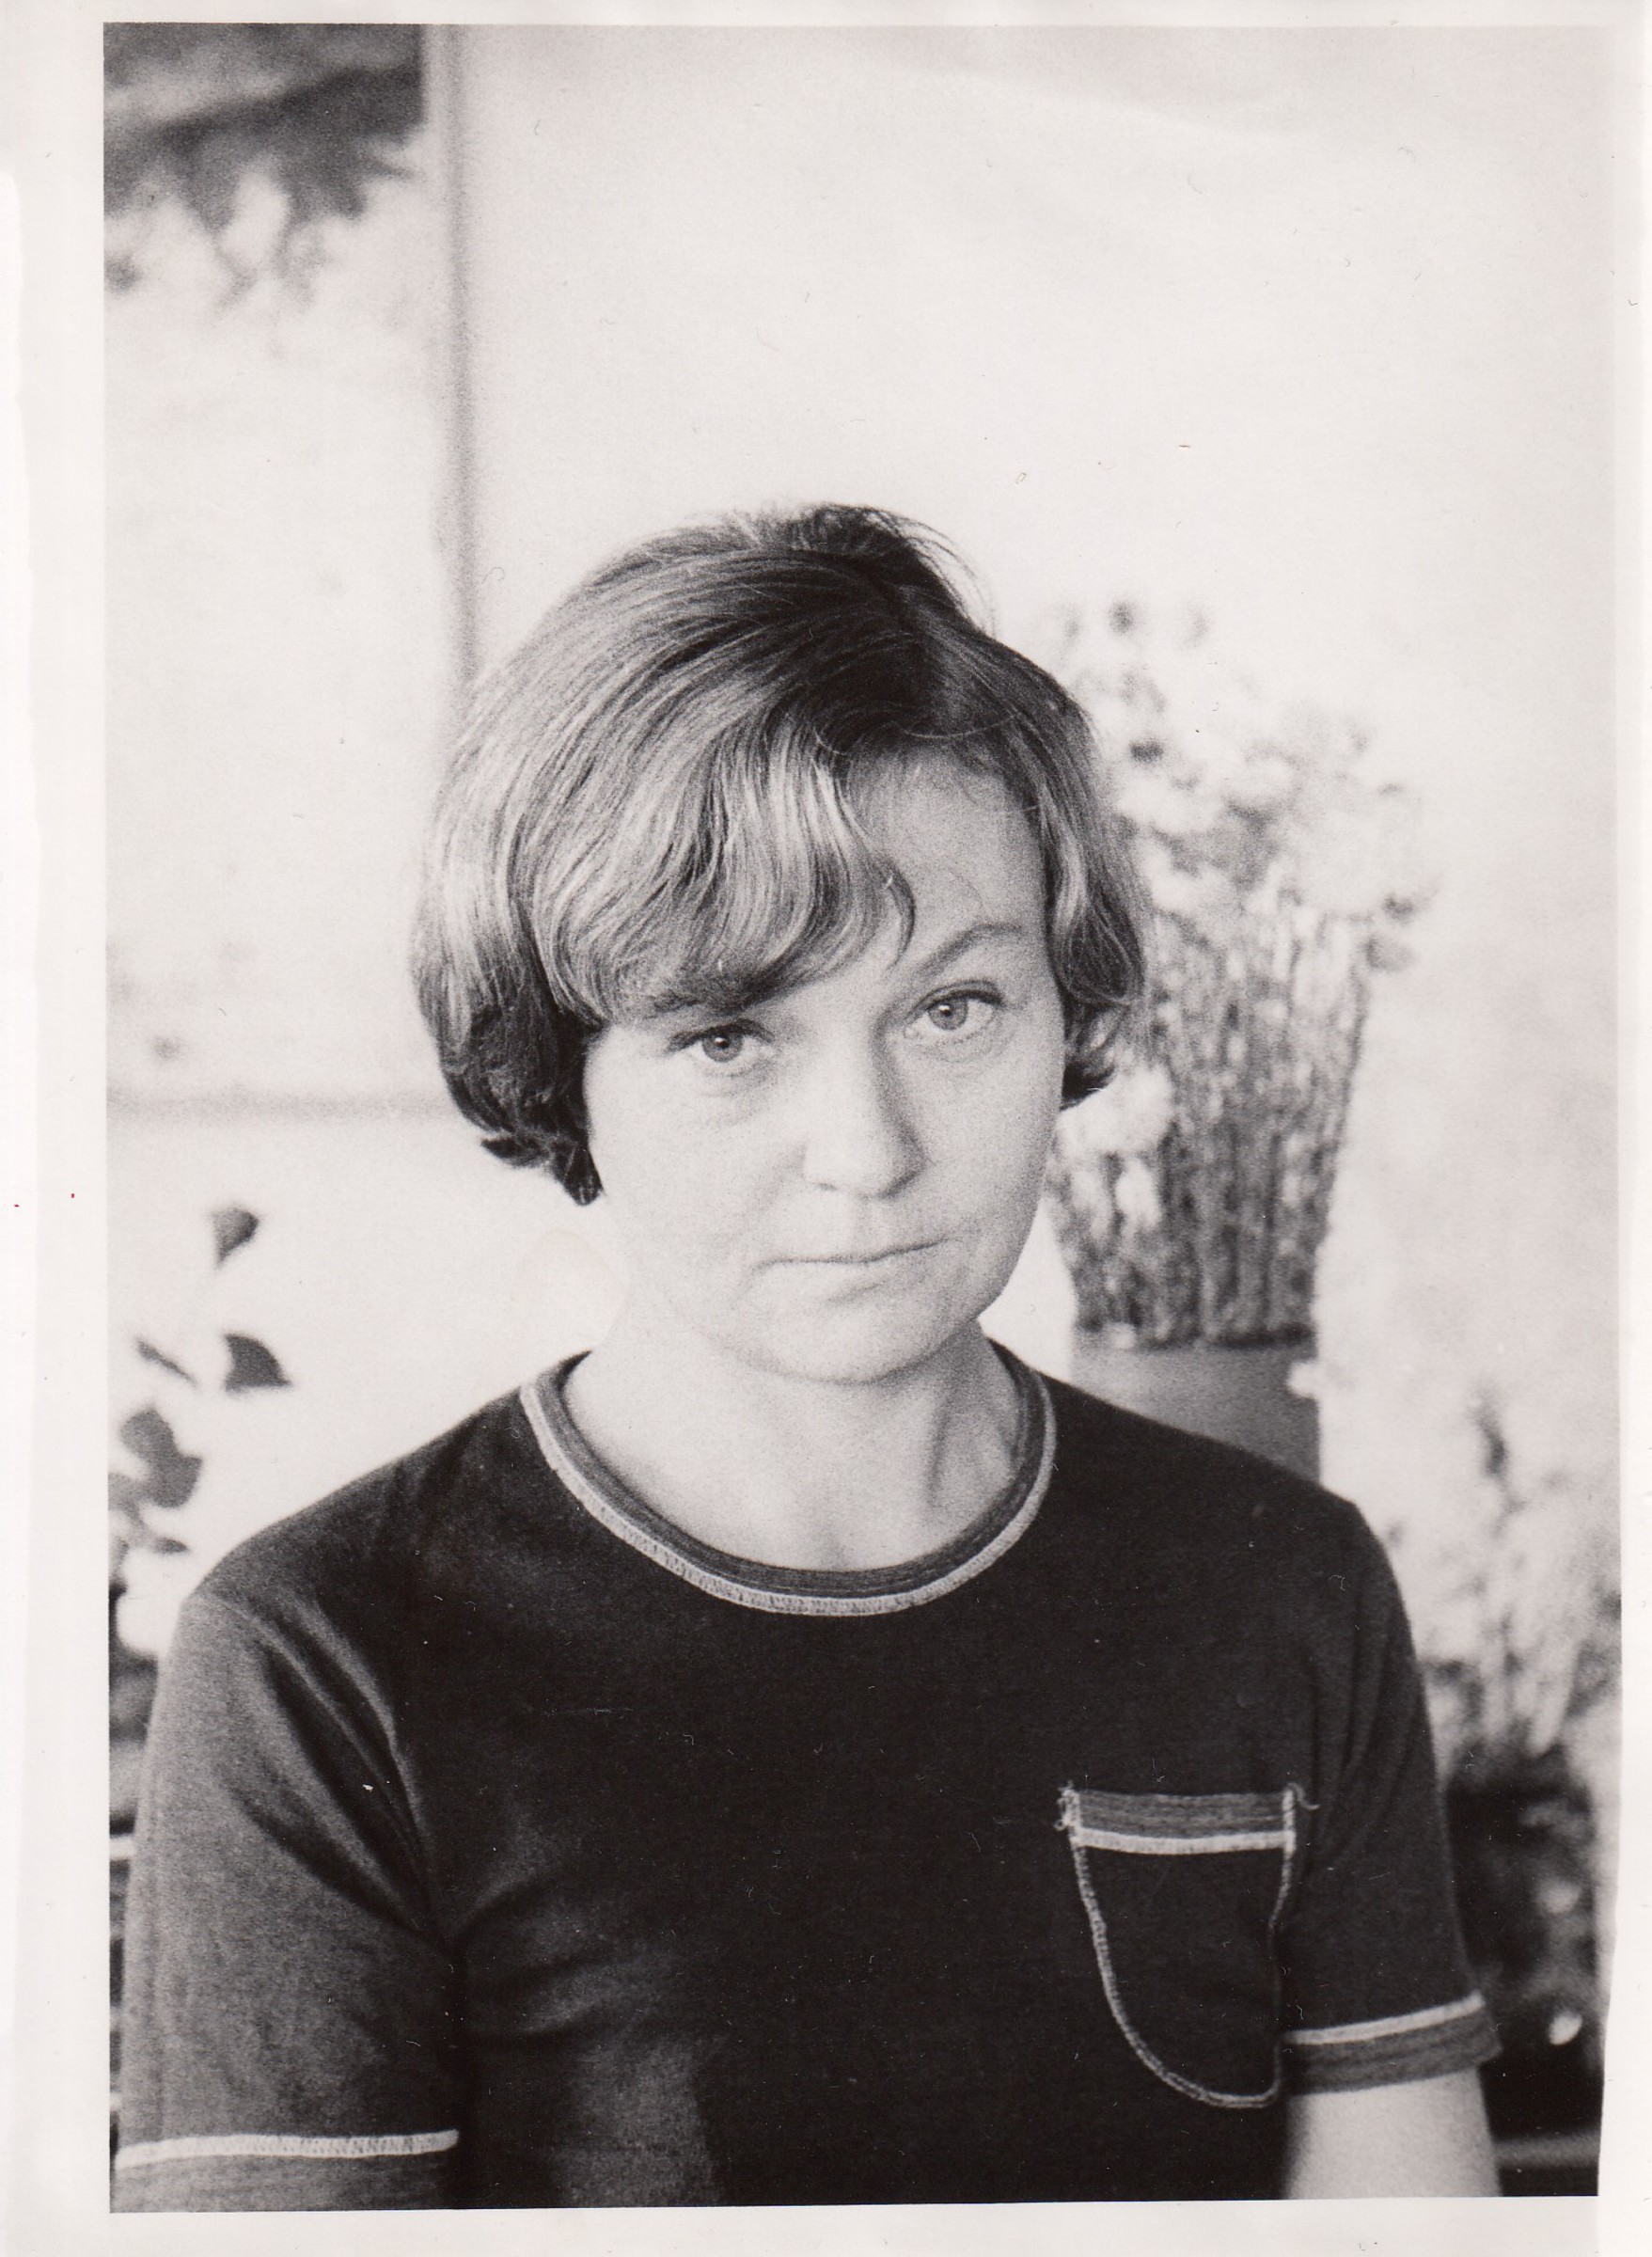 Eda Kriseová in the 1960s